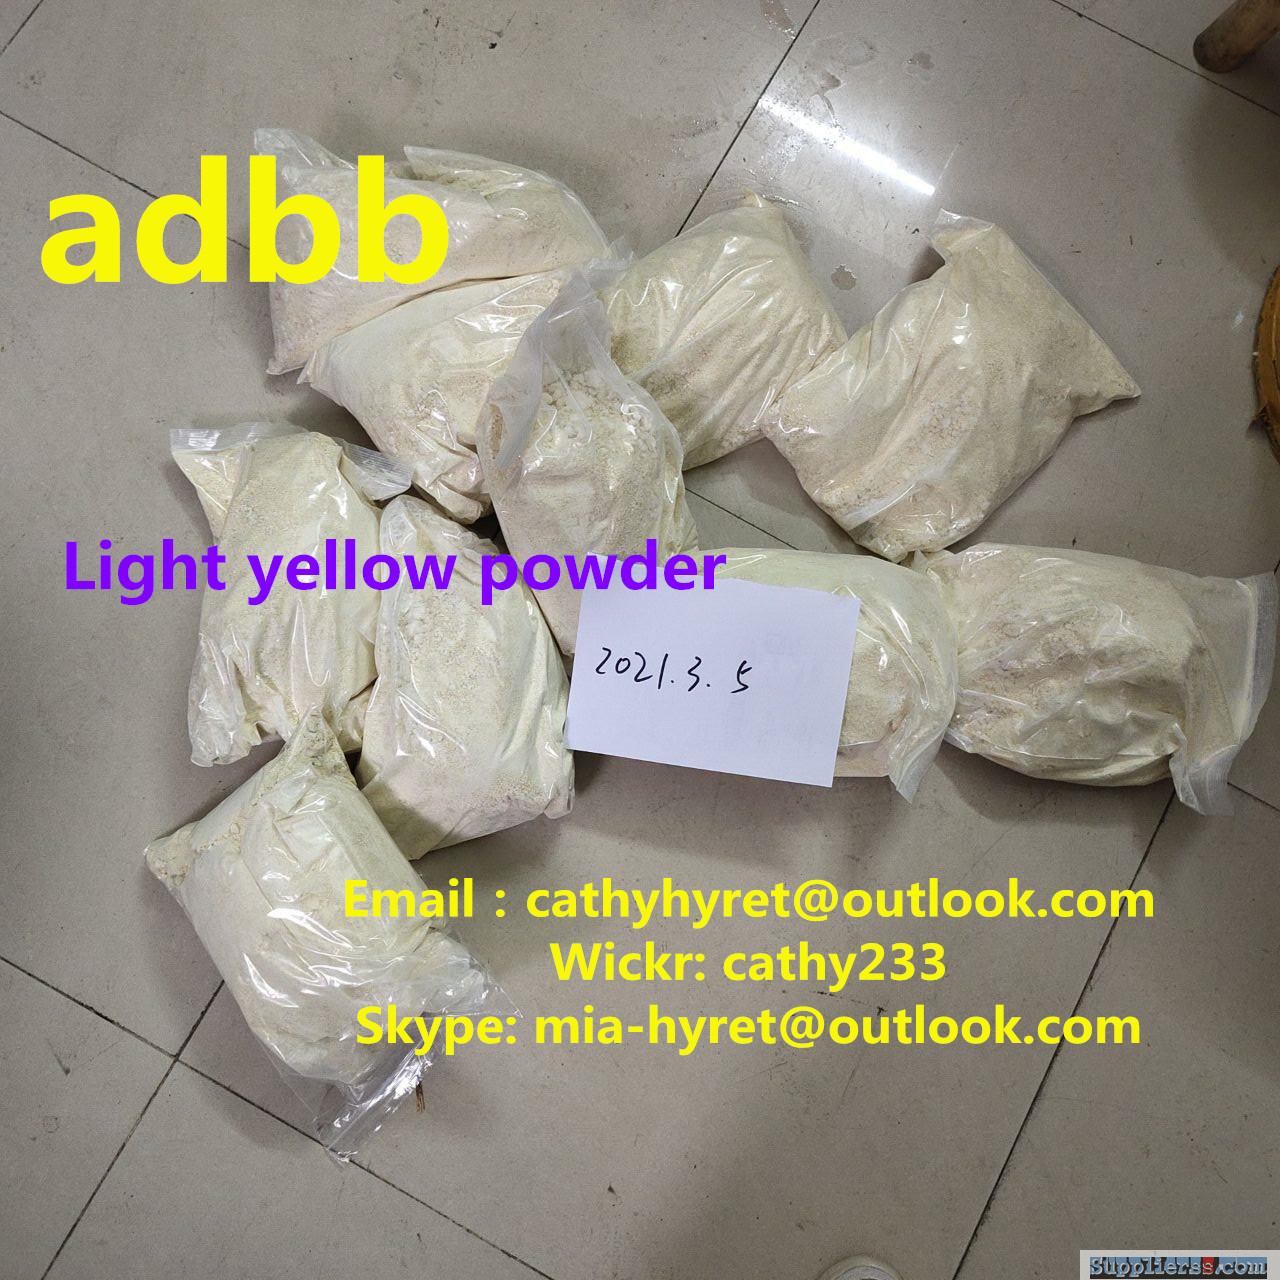 Direct Supply Factory Adbb Powder 5fmdmb2201 Light Yellow Powder cathyhyret@outlook.com